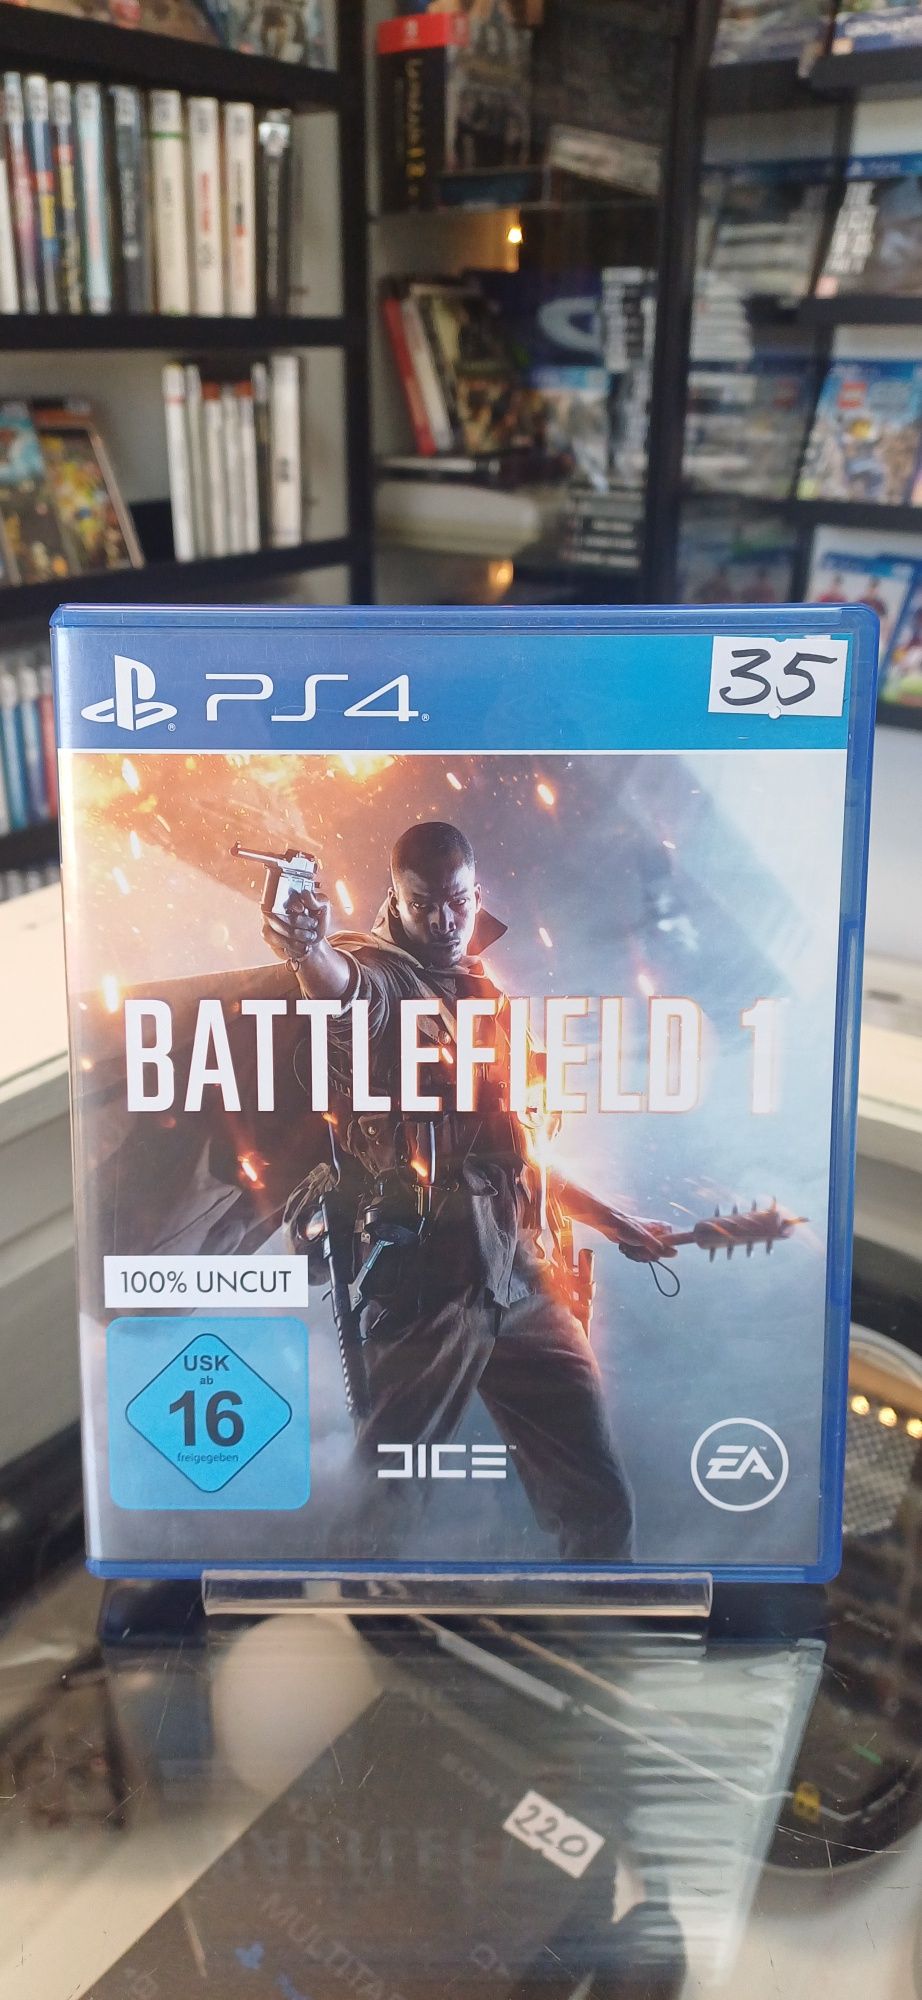 Battlefield 1 - PS4